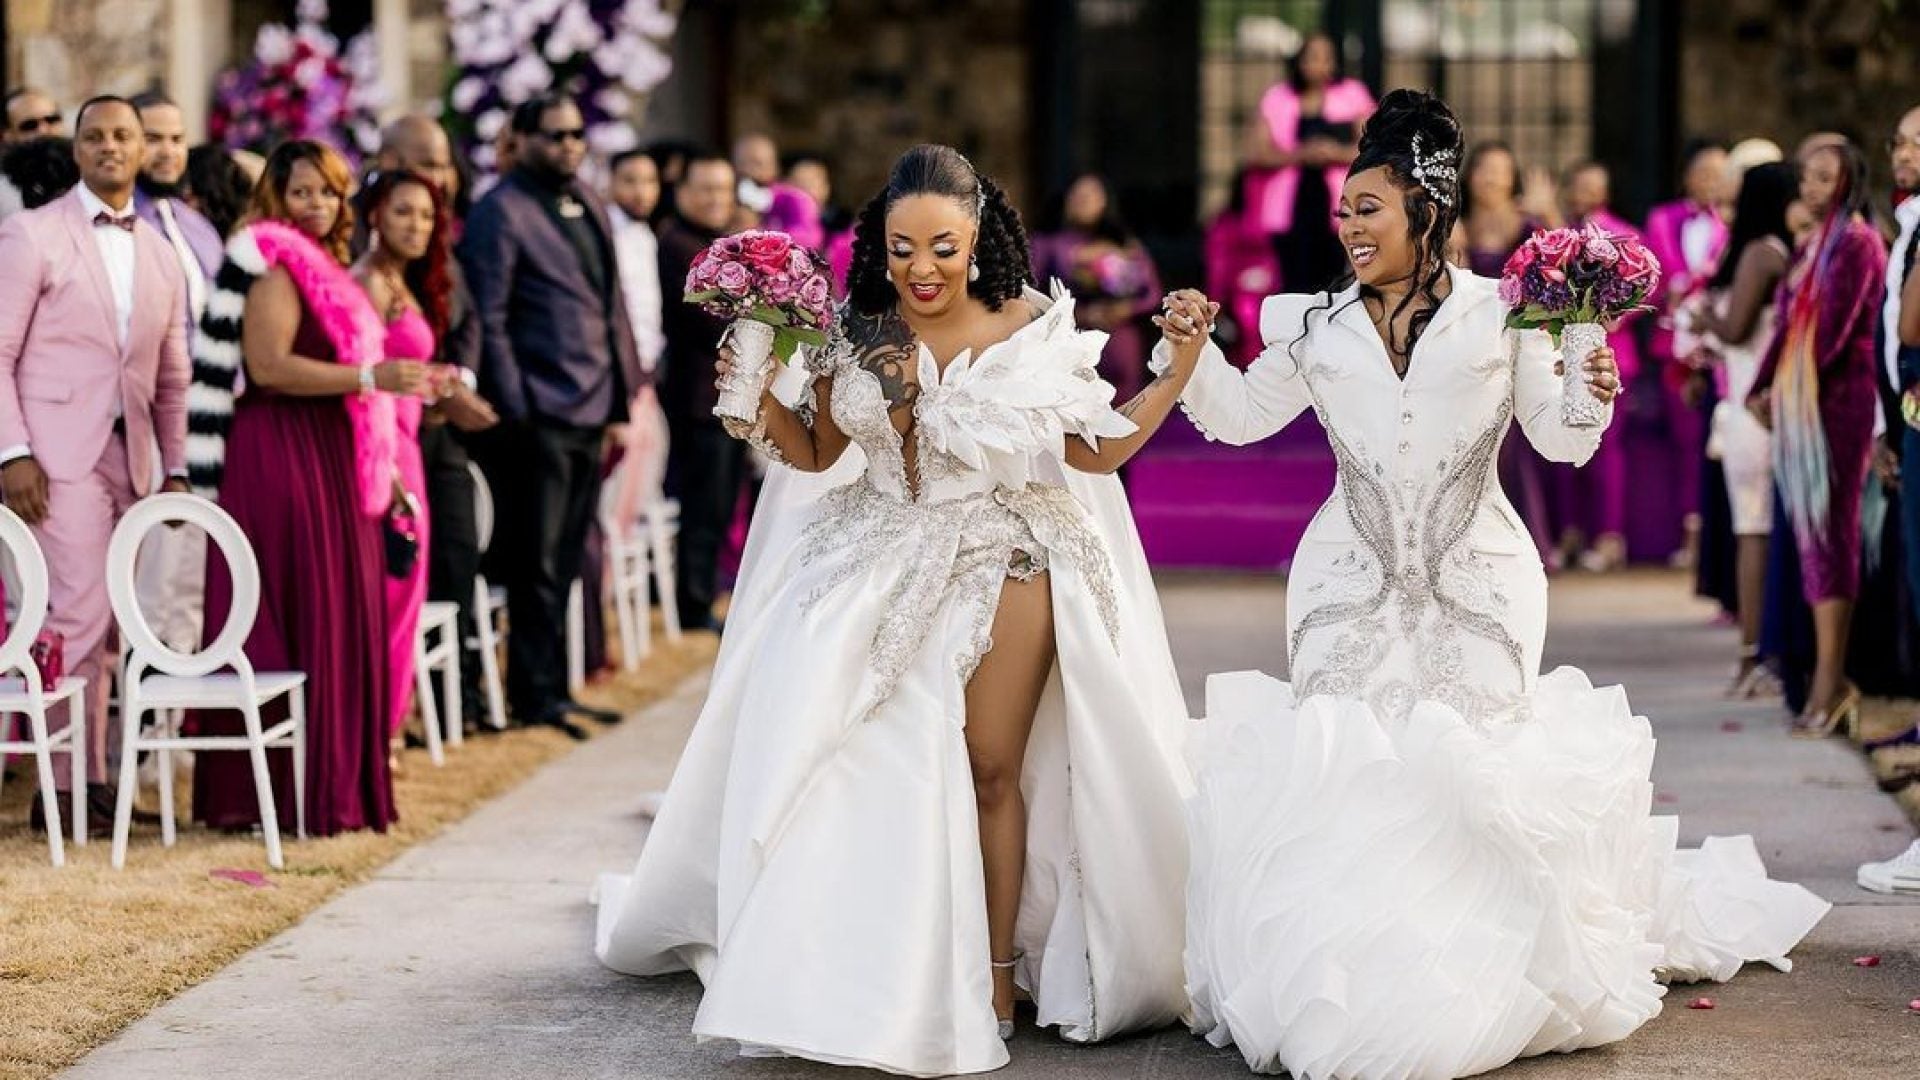 Da Brat, Jesseca Dupart Wed In Star-Studded Celebration With Jermaine Dupri, LisaRaye In Wedding Party